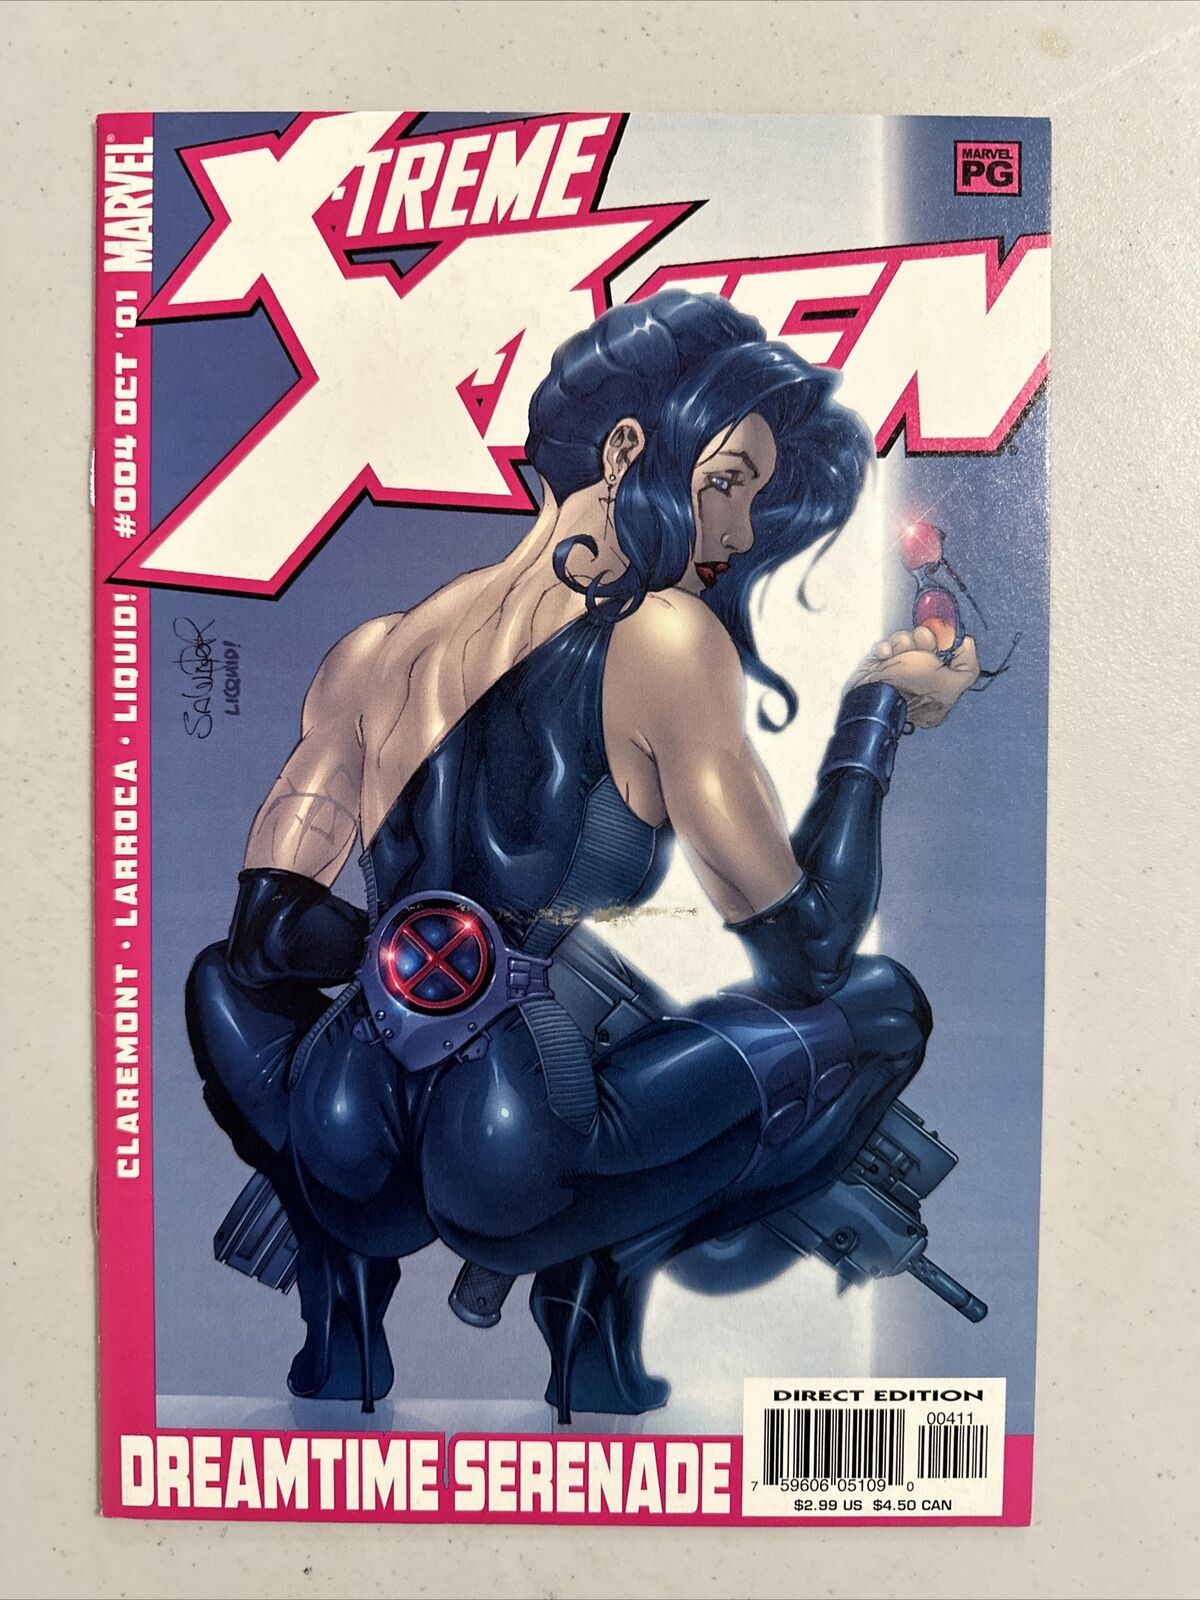 X-Treme X-Men #4 Marvel Comics HIGH GRADE COMBINE S&H